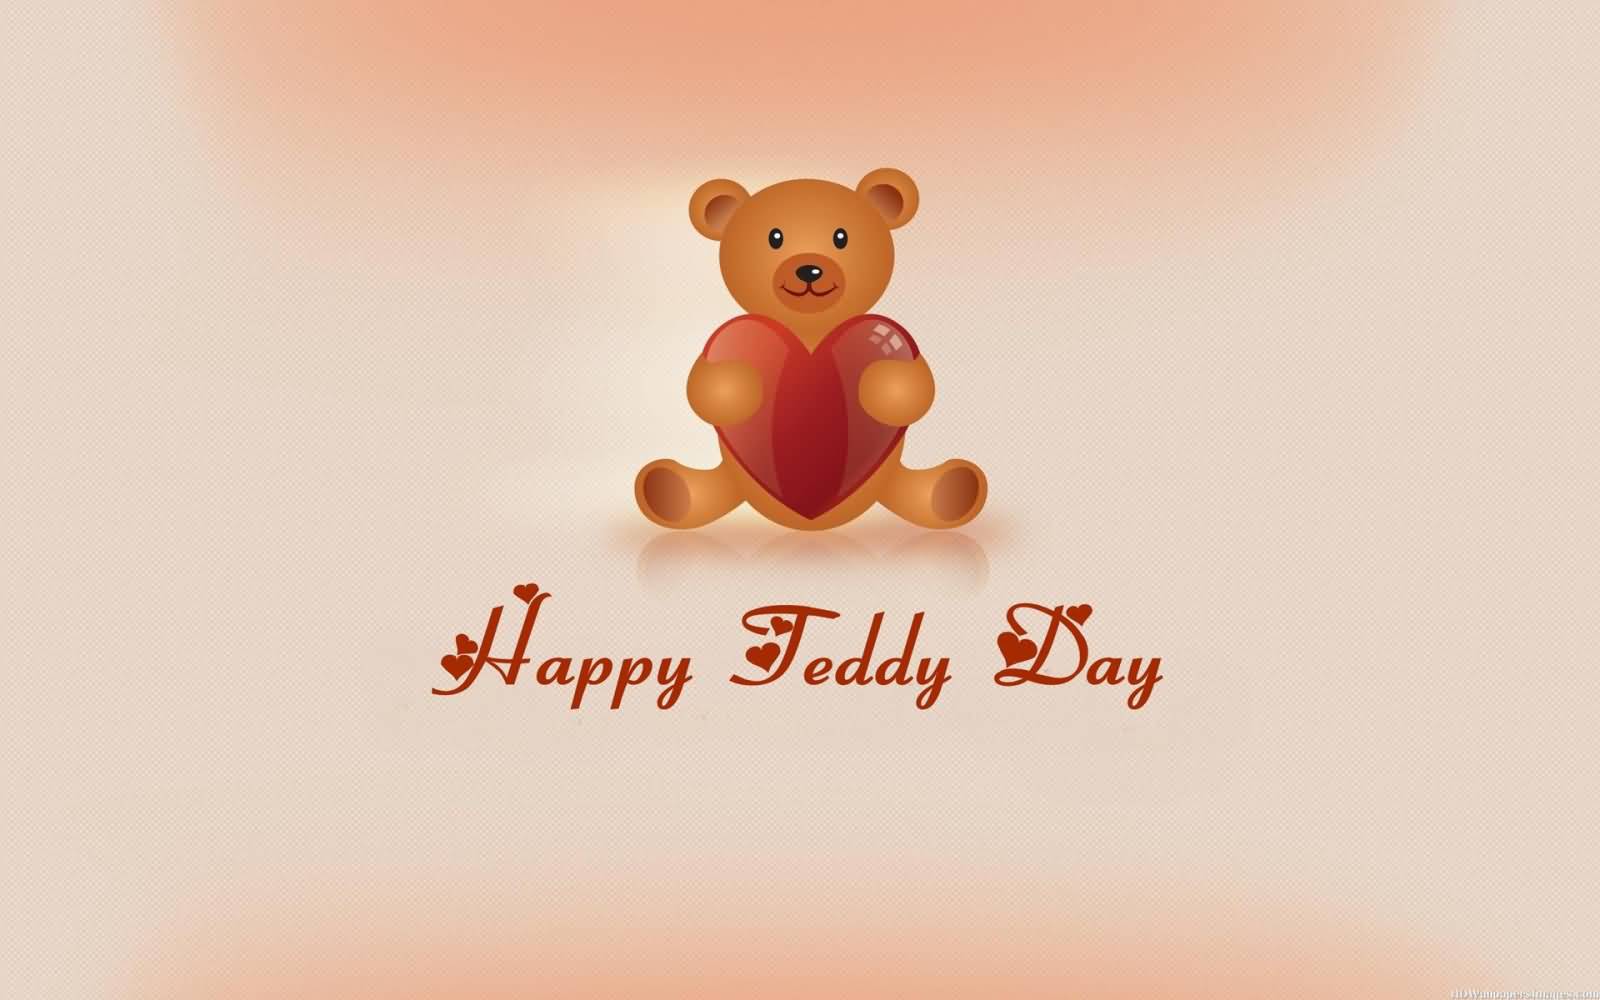 Happy Teddy Day Teddy Bear With Heart Wallpaper